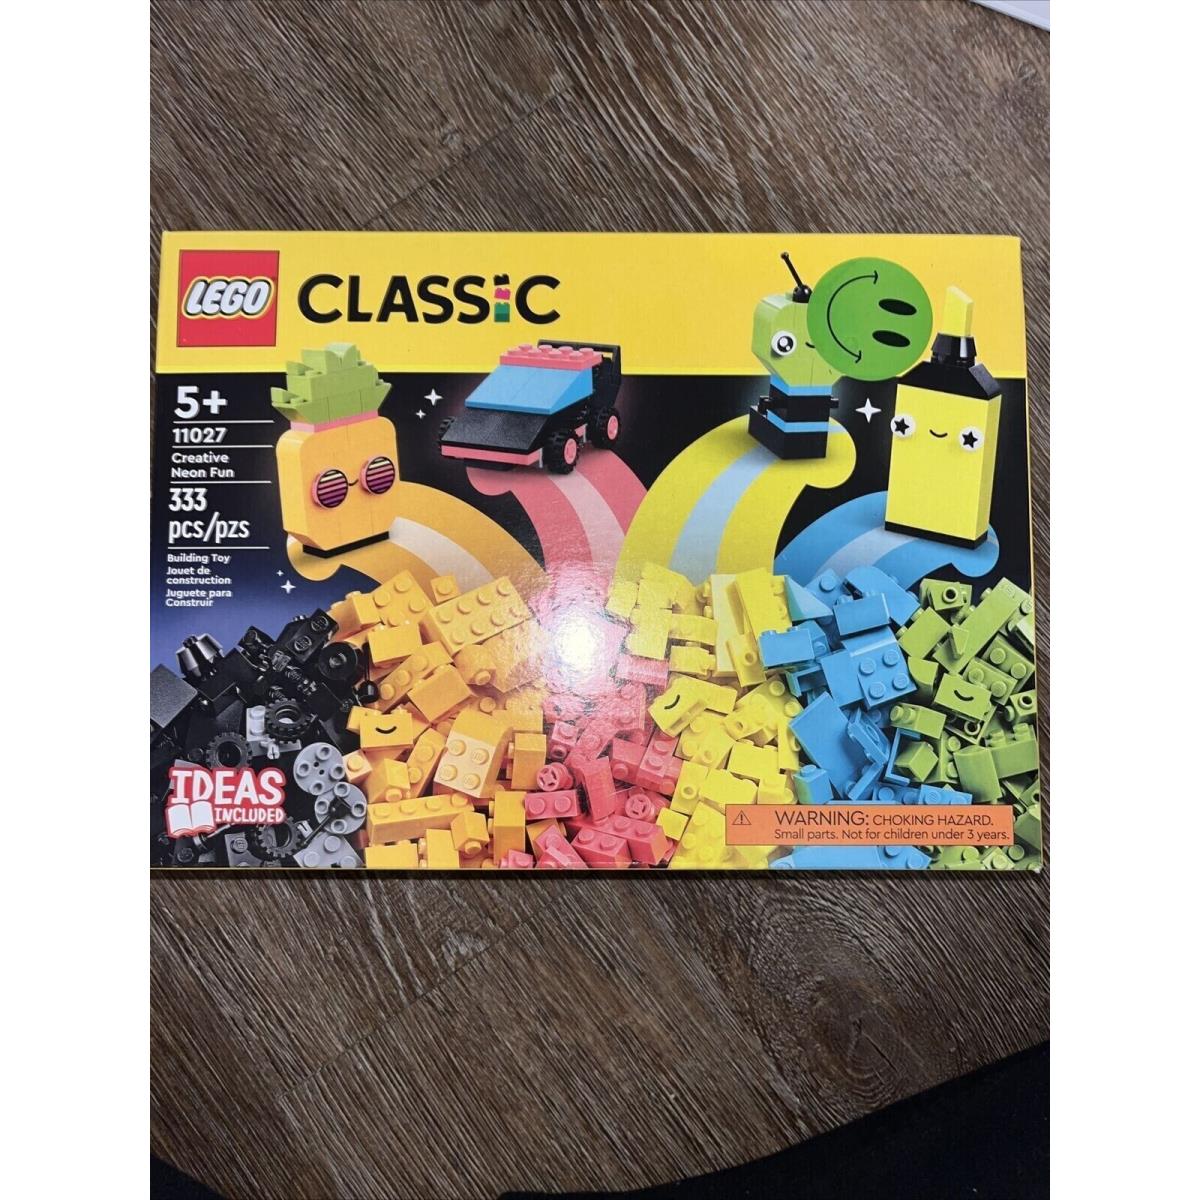 Lego Classic: Creative Neon Fun 11027 Building Set